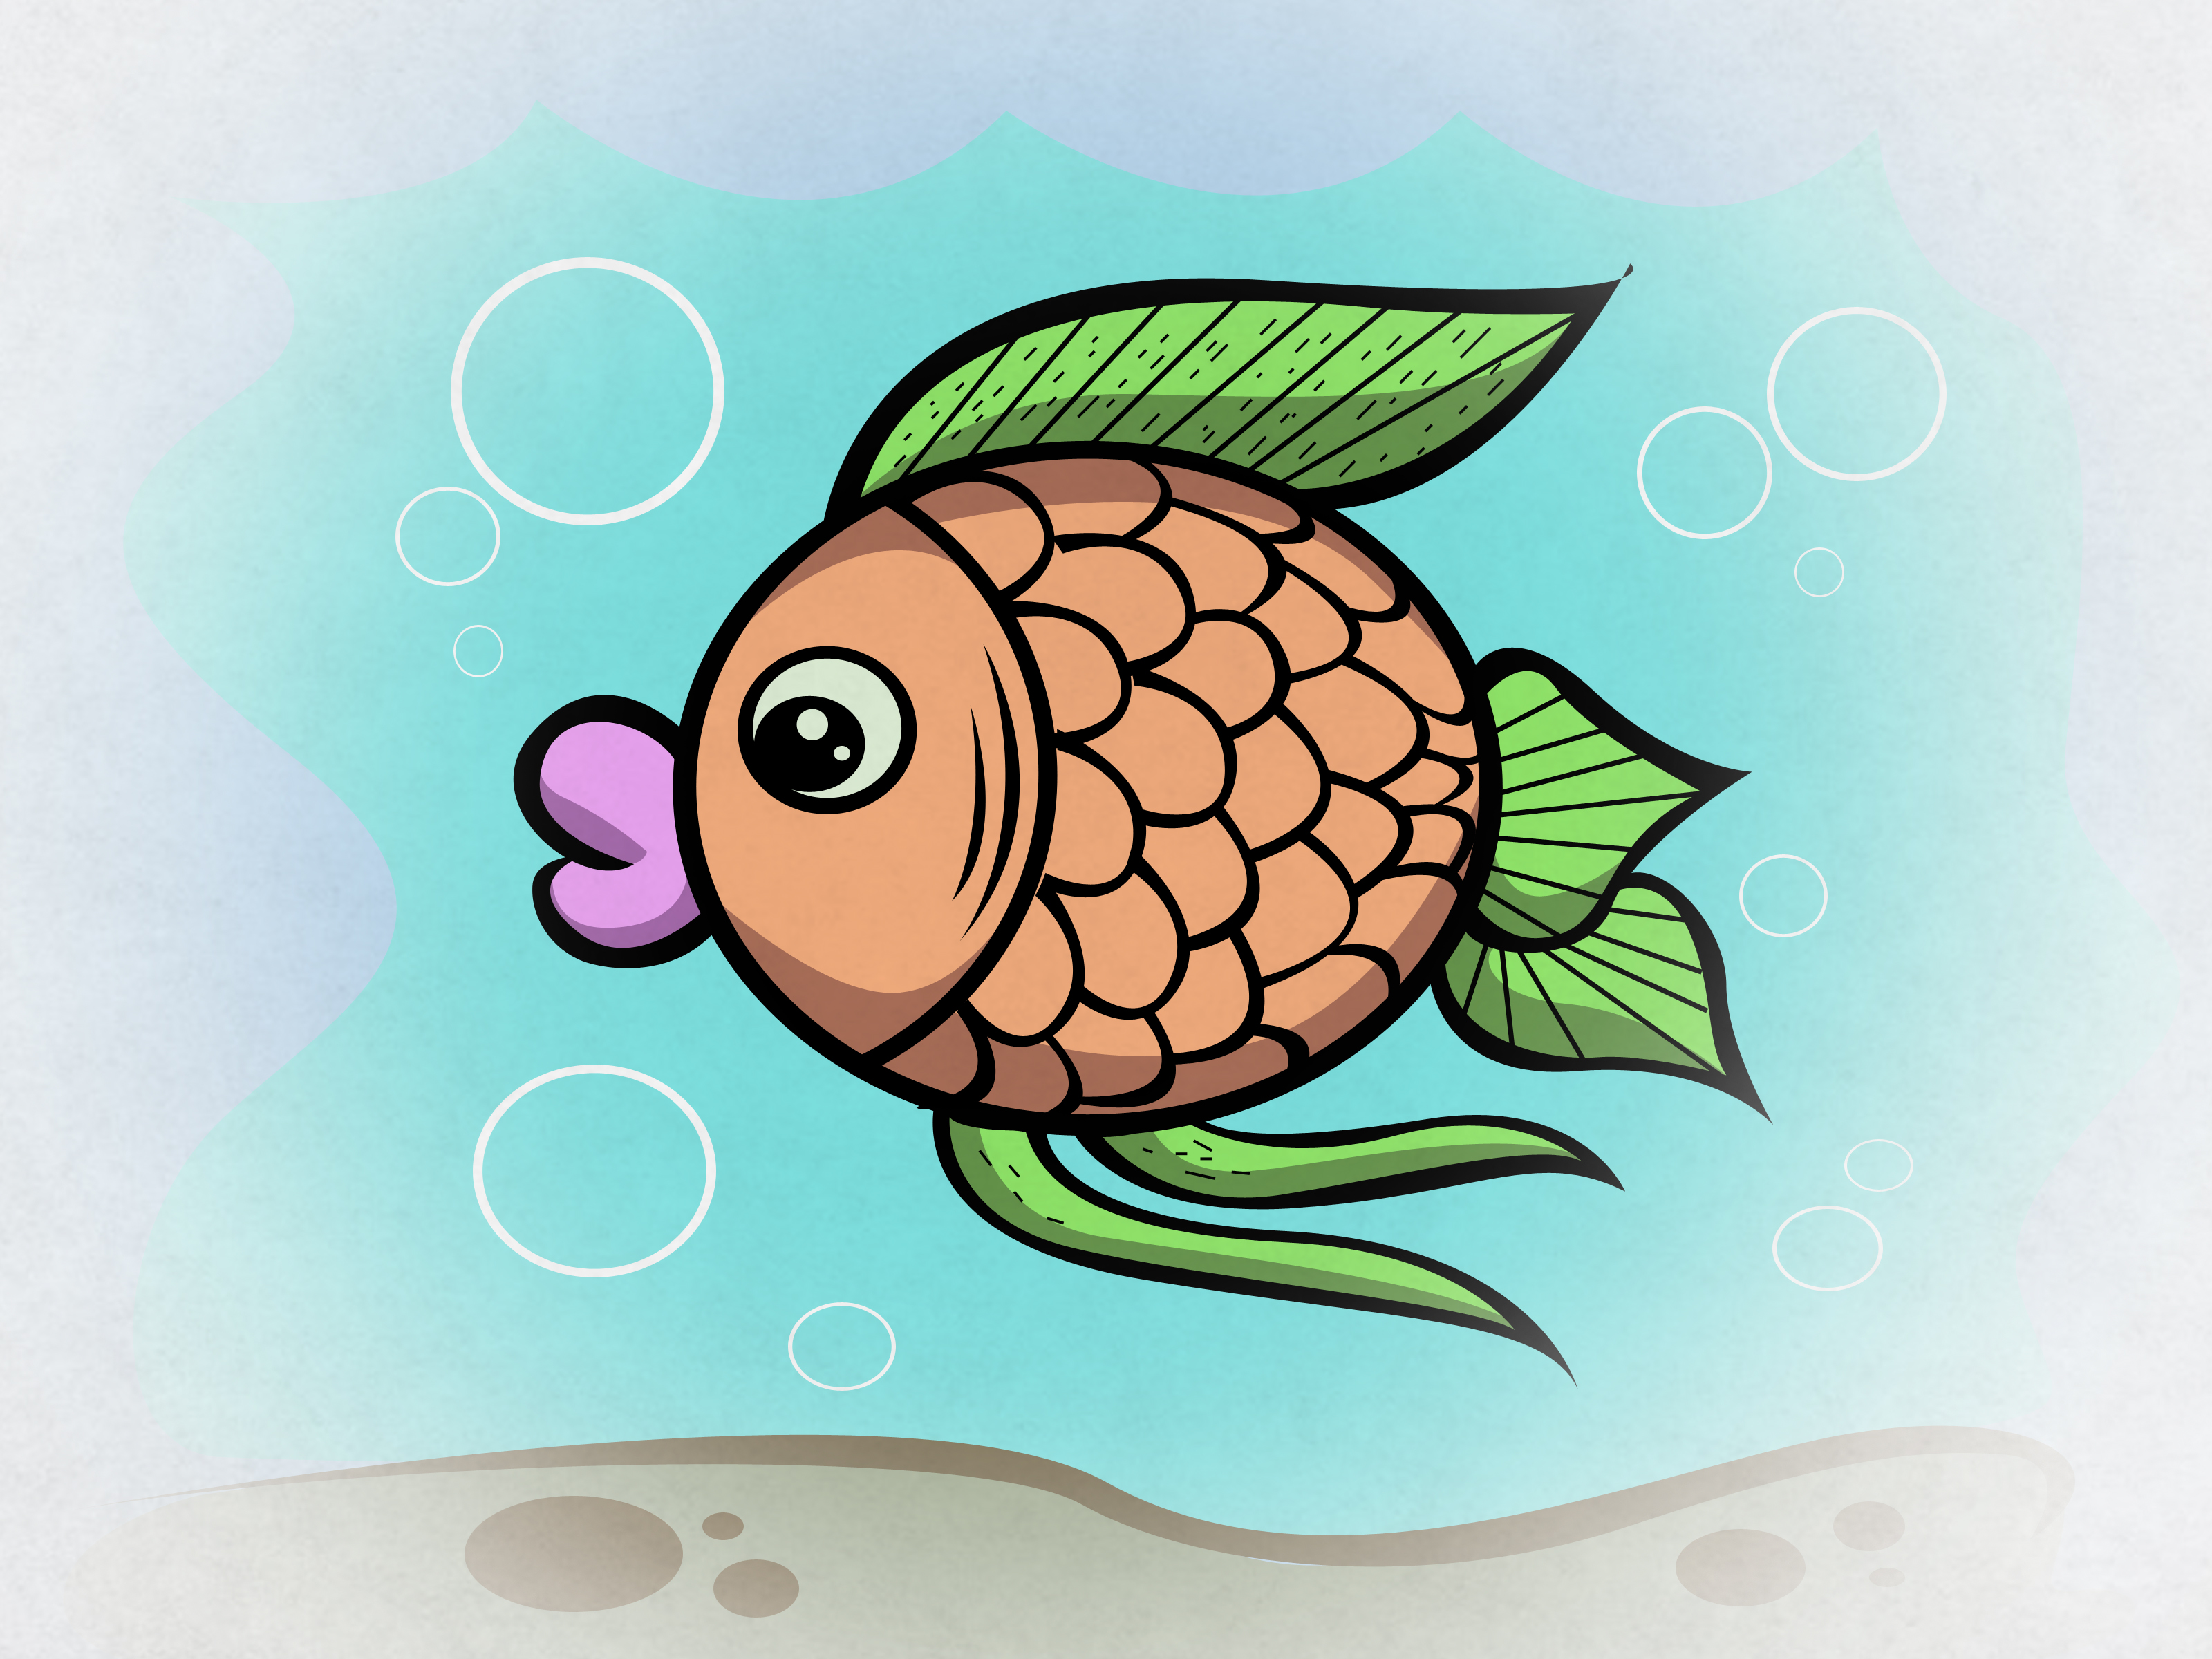 Draw-a-Cartoon-Fish-Intro.jpg